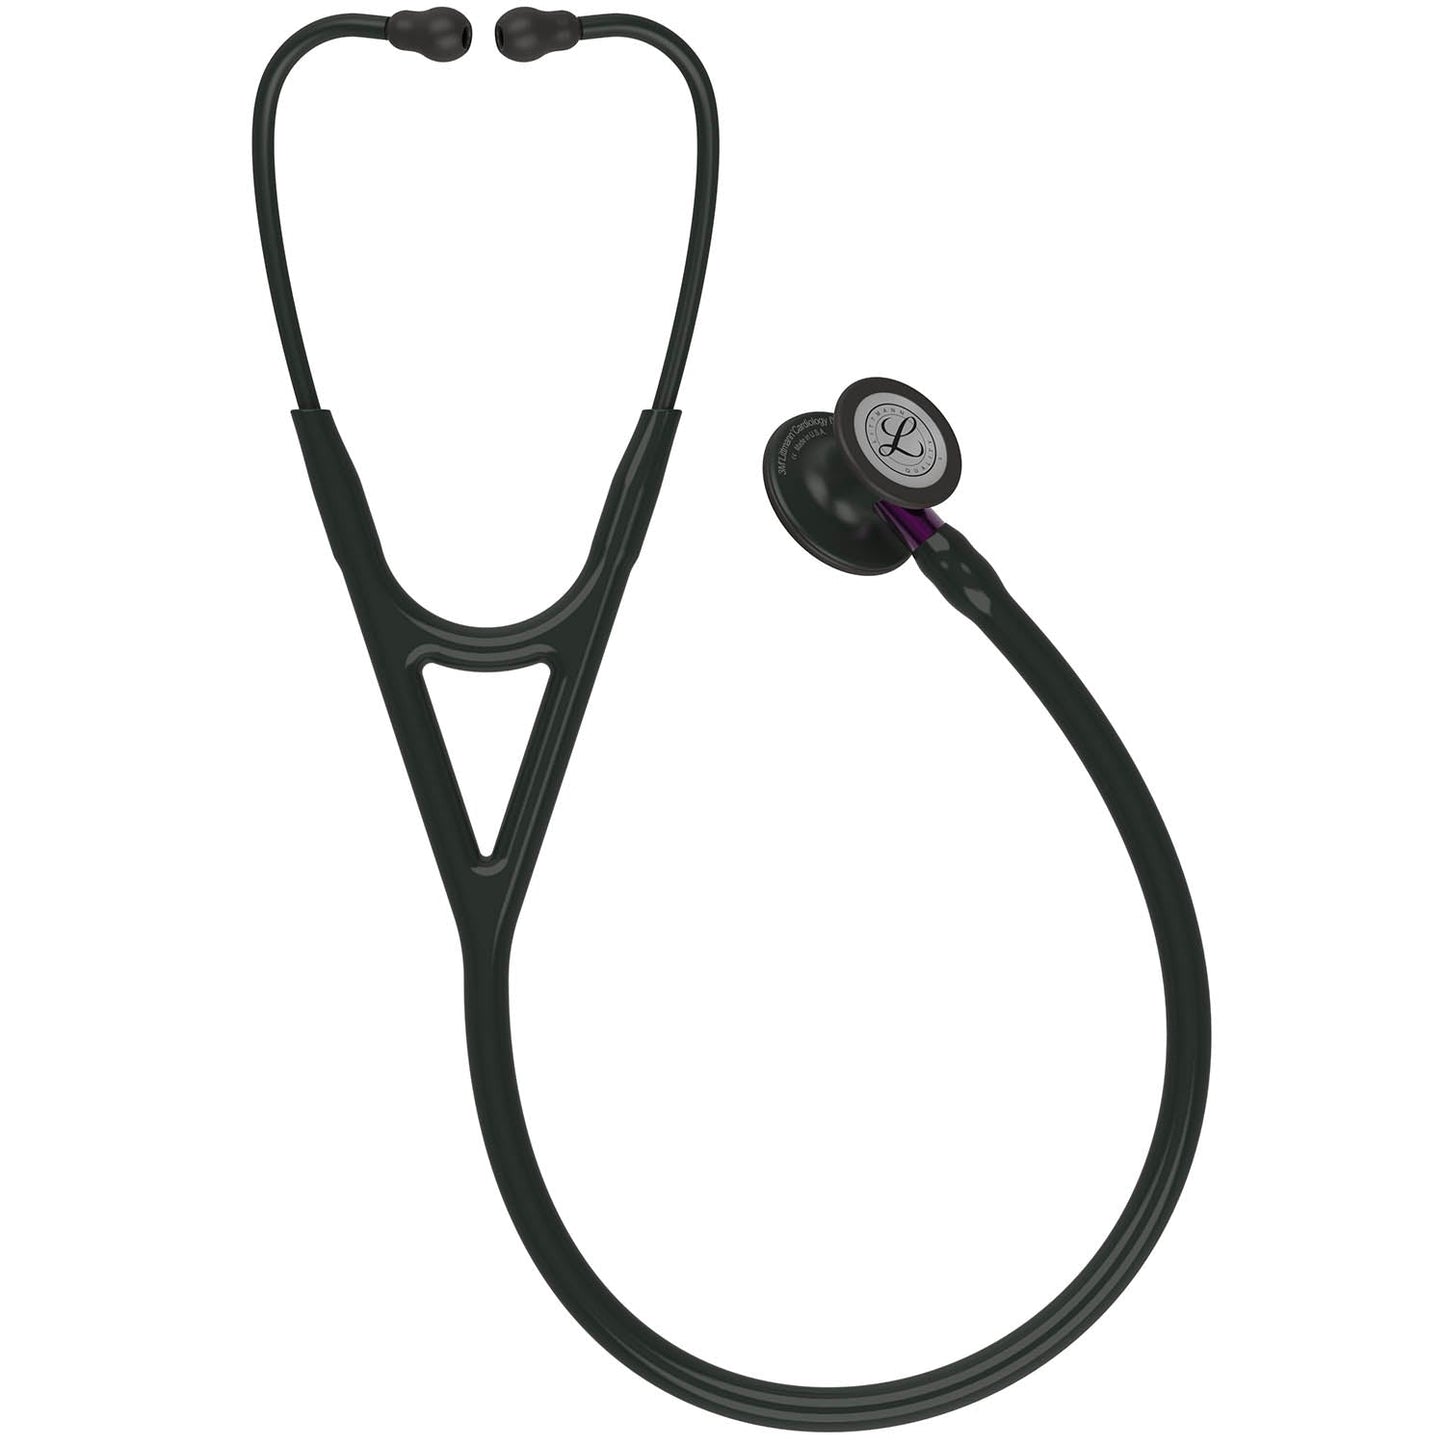 Stetoskopju Dijanjostiku Littmann Cardiology IV: Iswed u Iswed - Zokk Vjola 6203